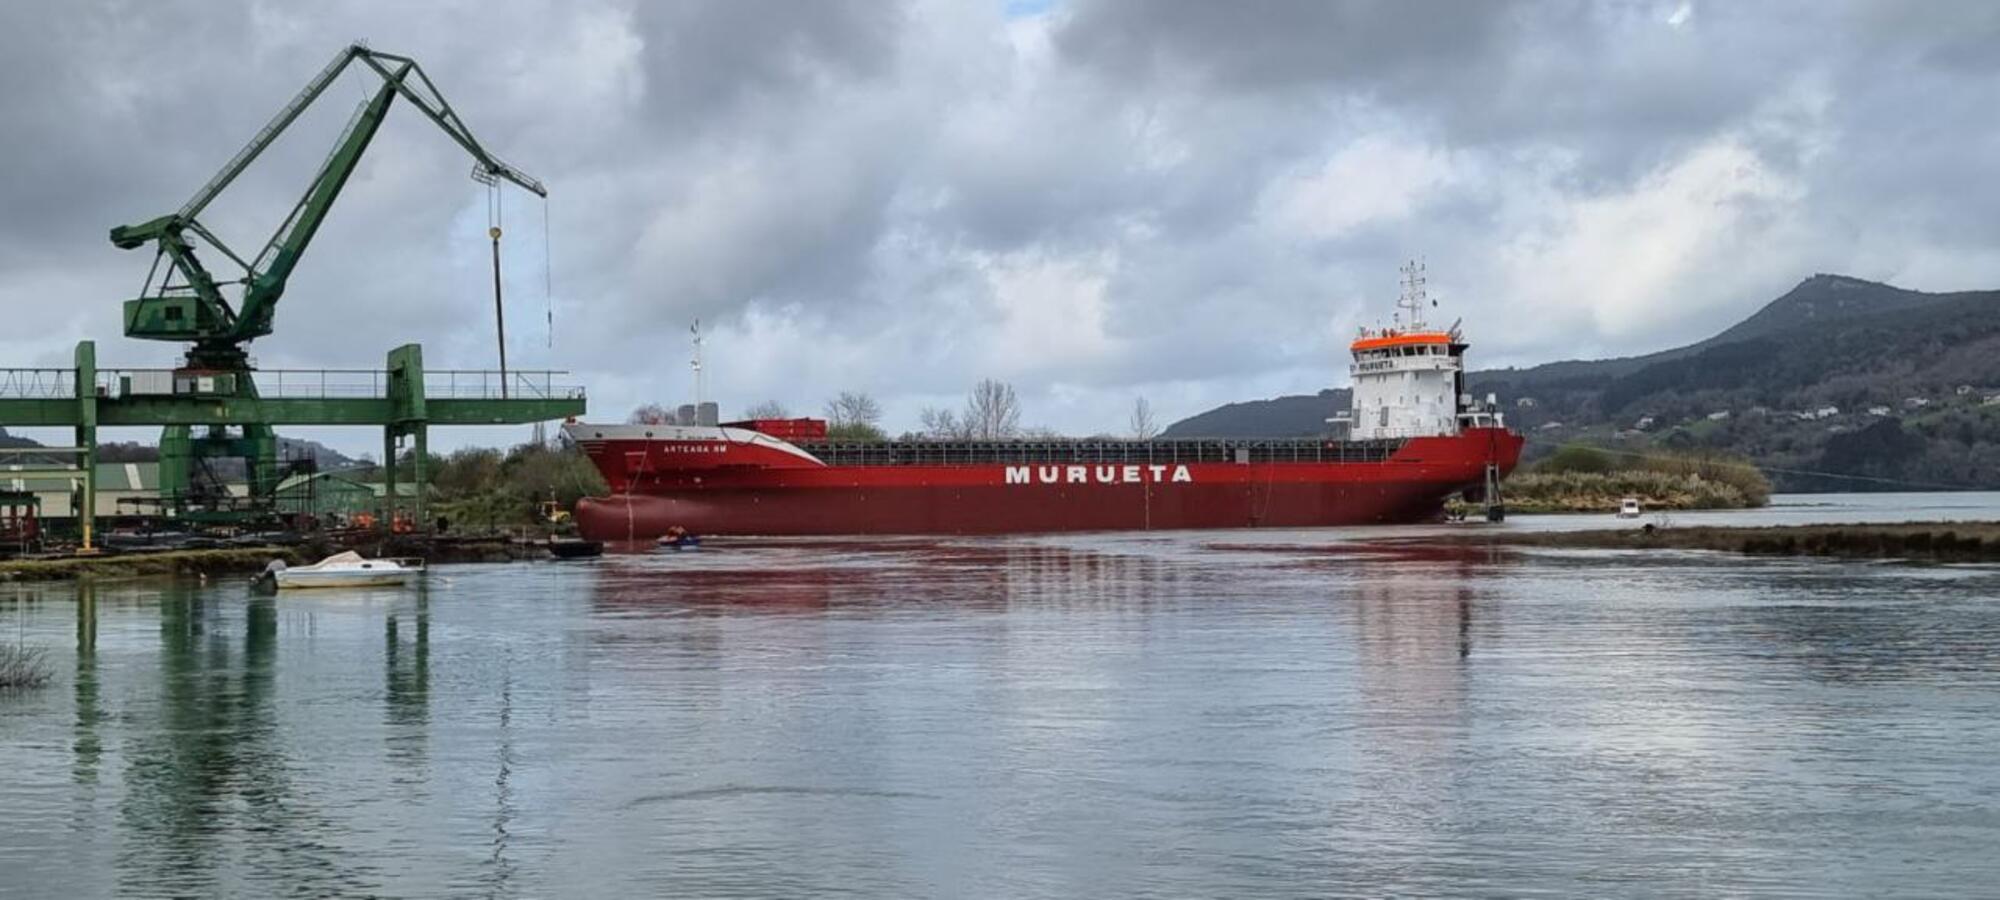 Astilleros Murueta barco Arteaga panorámica en la marisma